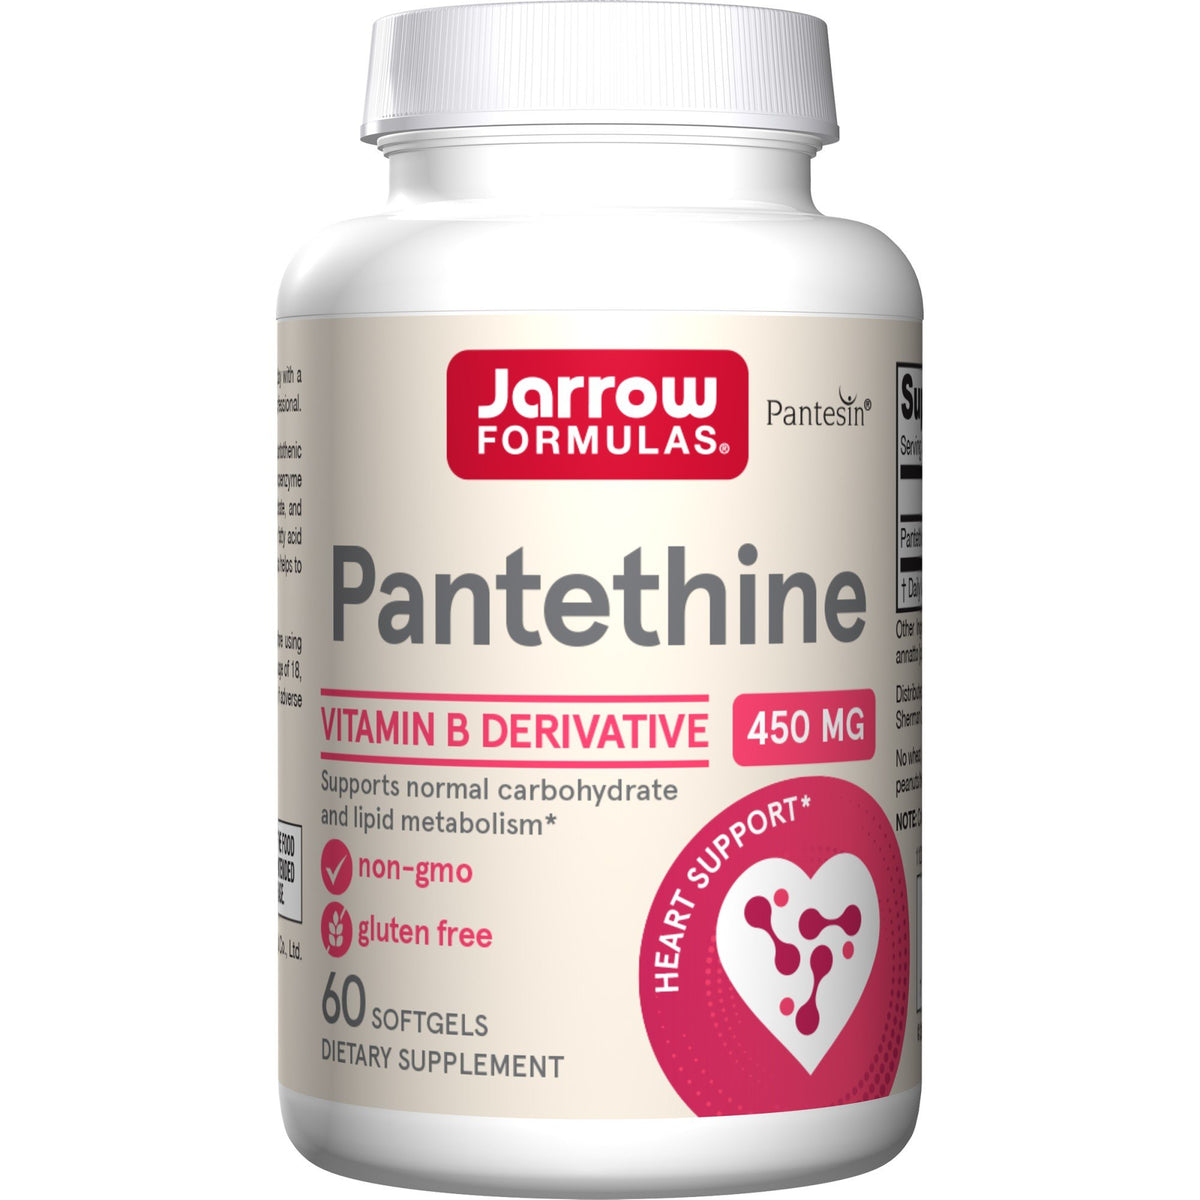 Jarrow Formulas Pantethine 450mg 60 Softgel